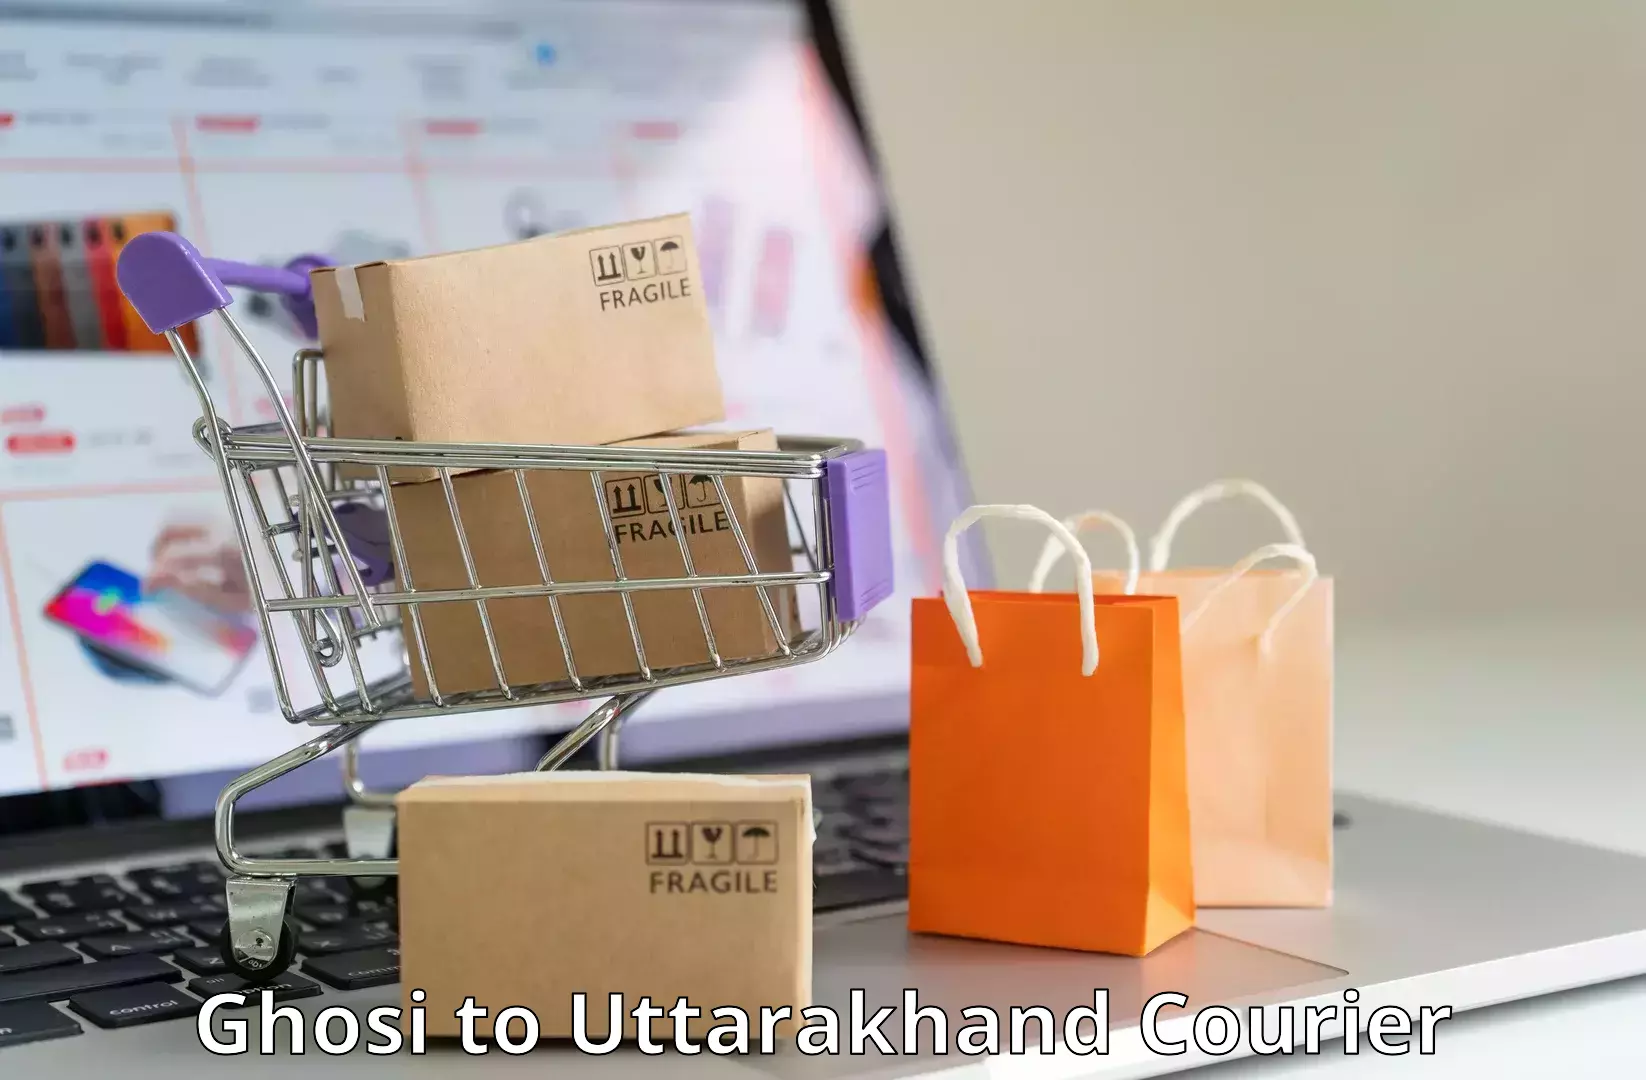 Logistics service provider Ghosi to Uttarakhand